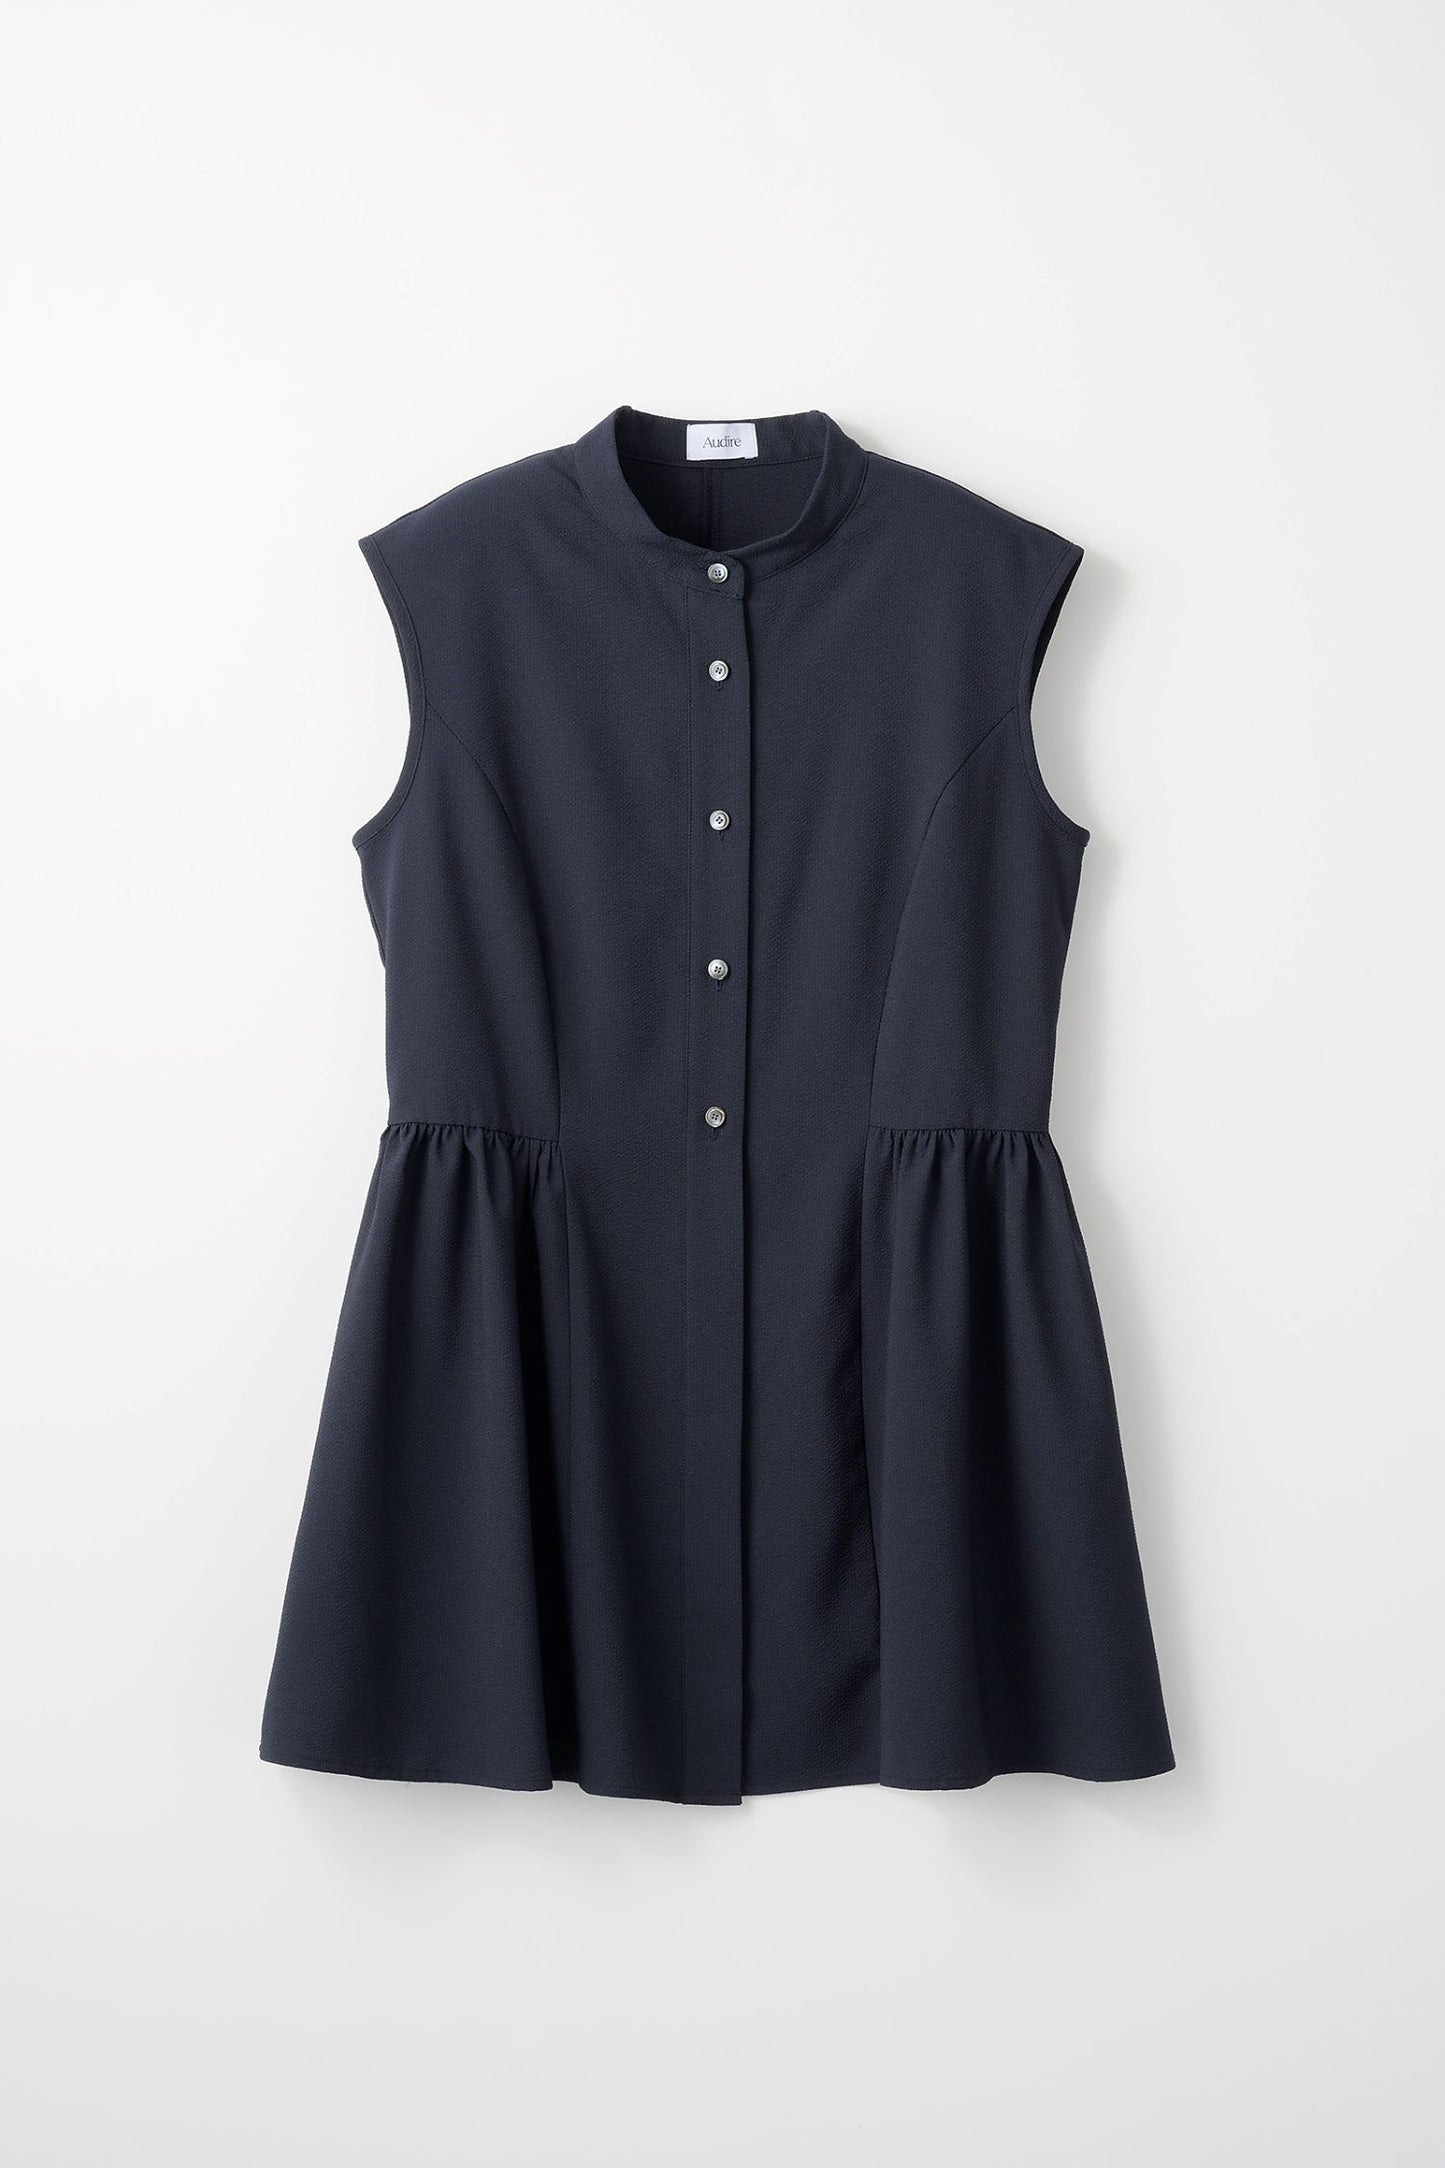 Urban lady blouse (Navy)